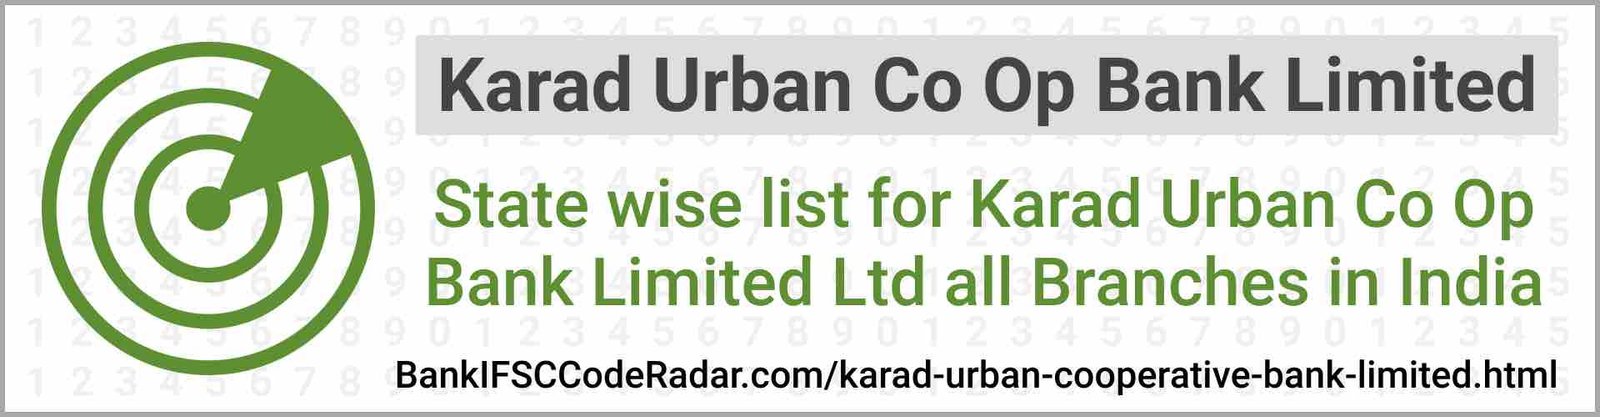 Karad Urban Cooperative Bank Limited All Branches India